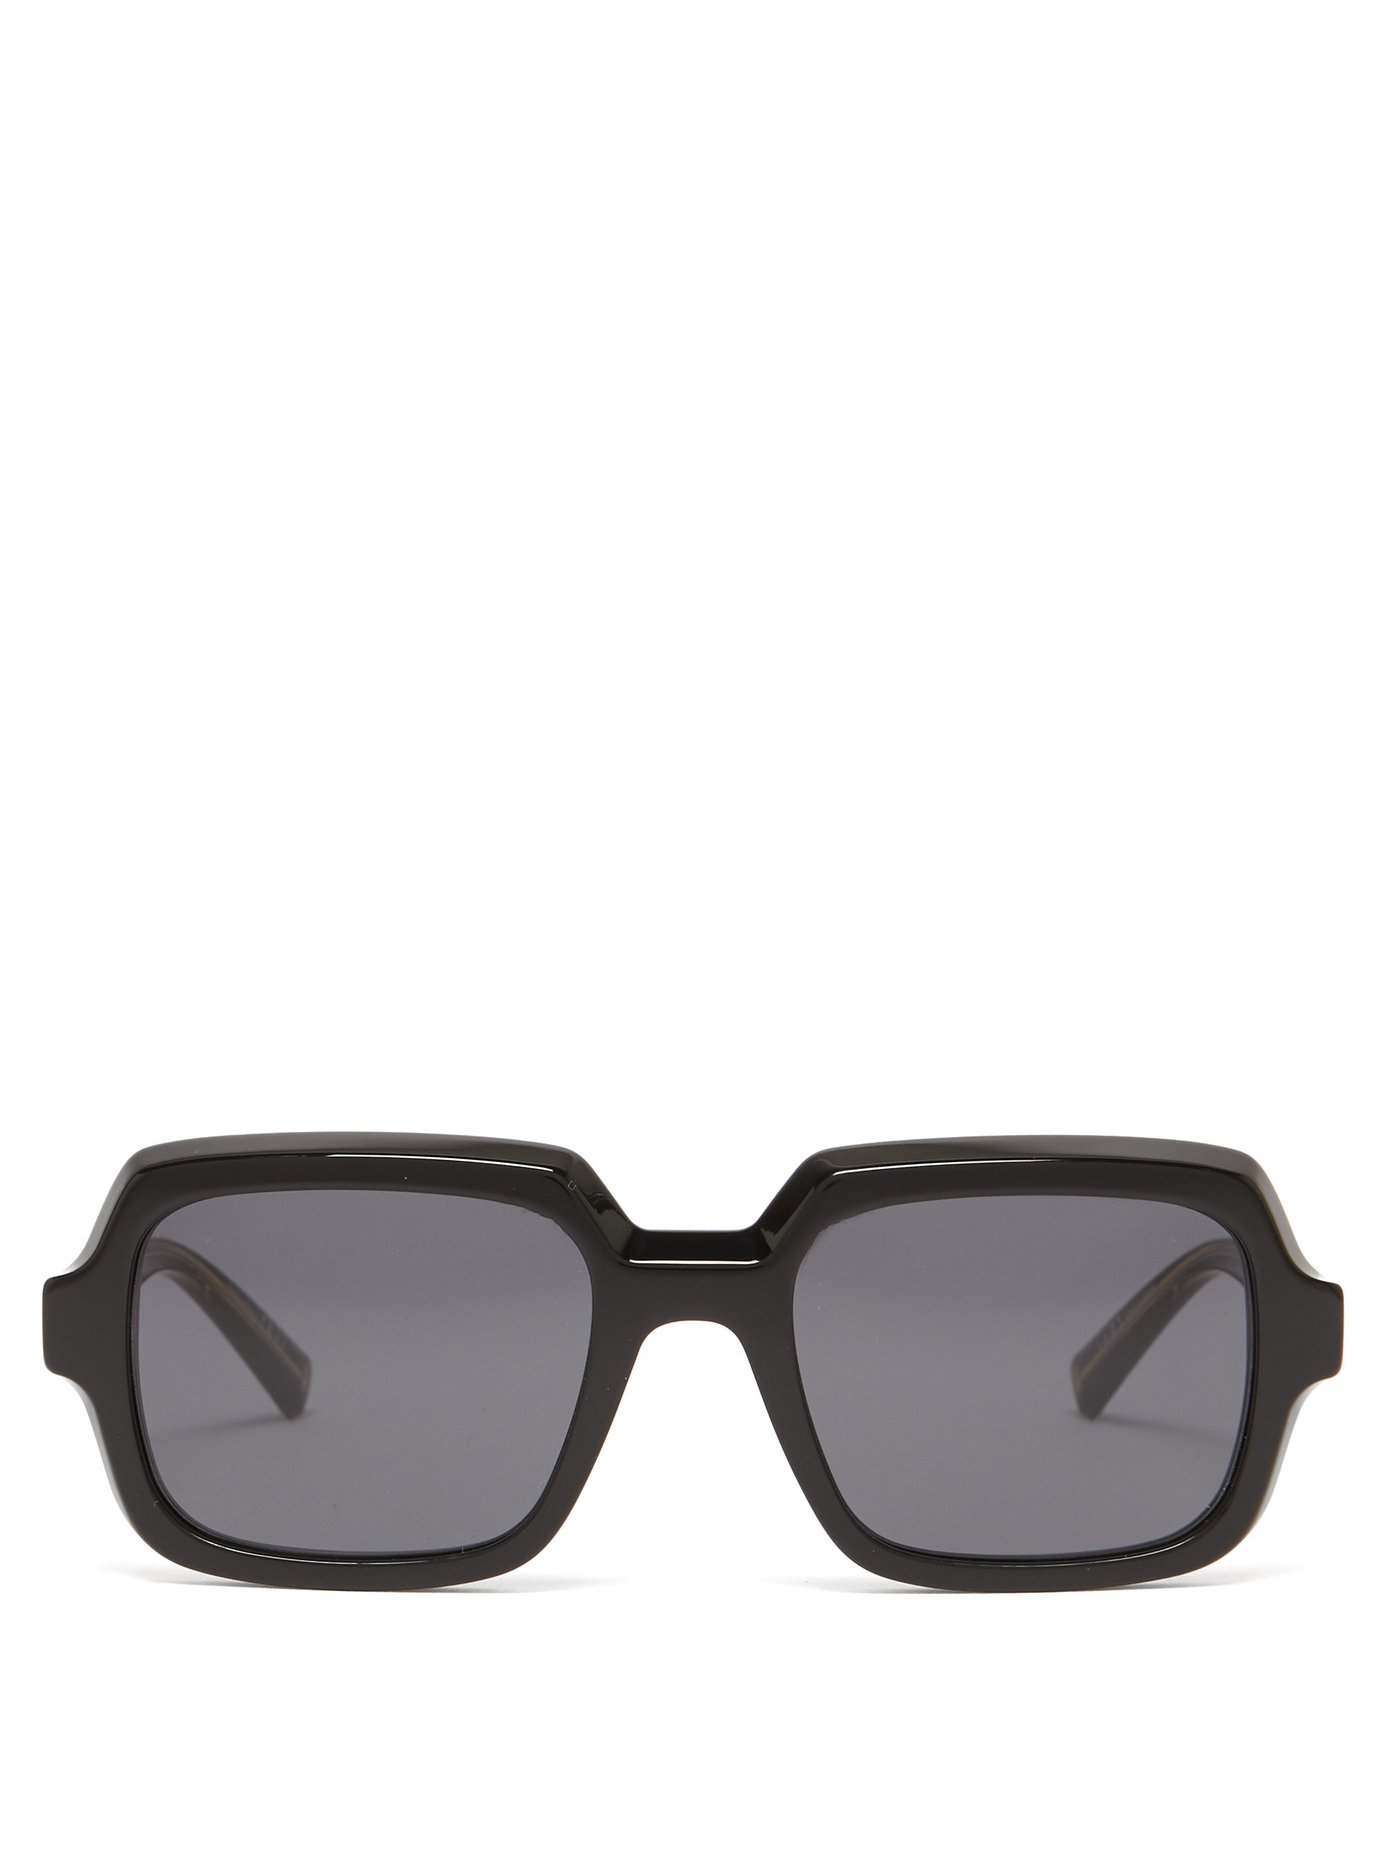 Square acetate sunglasses | Givenchy 